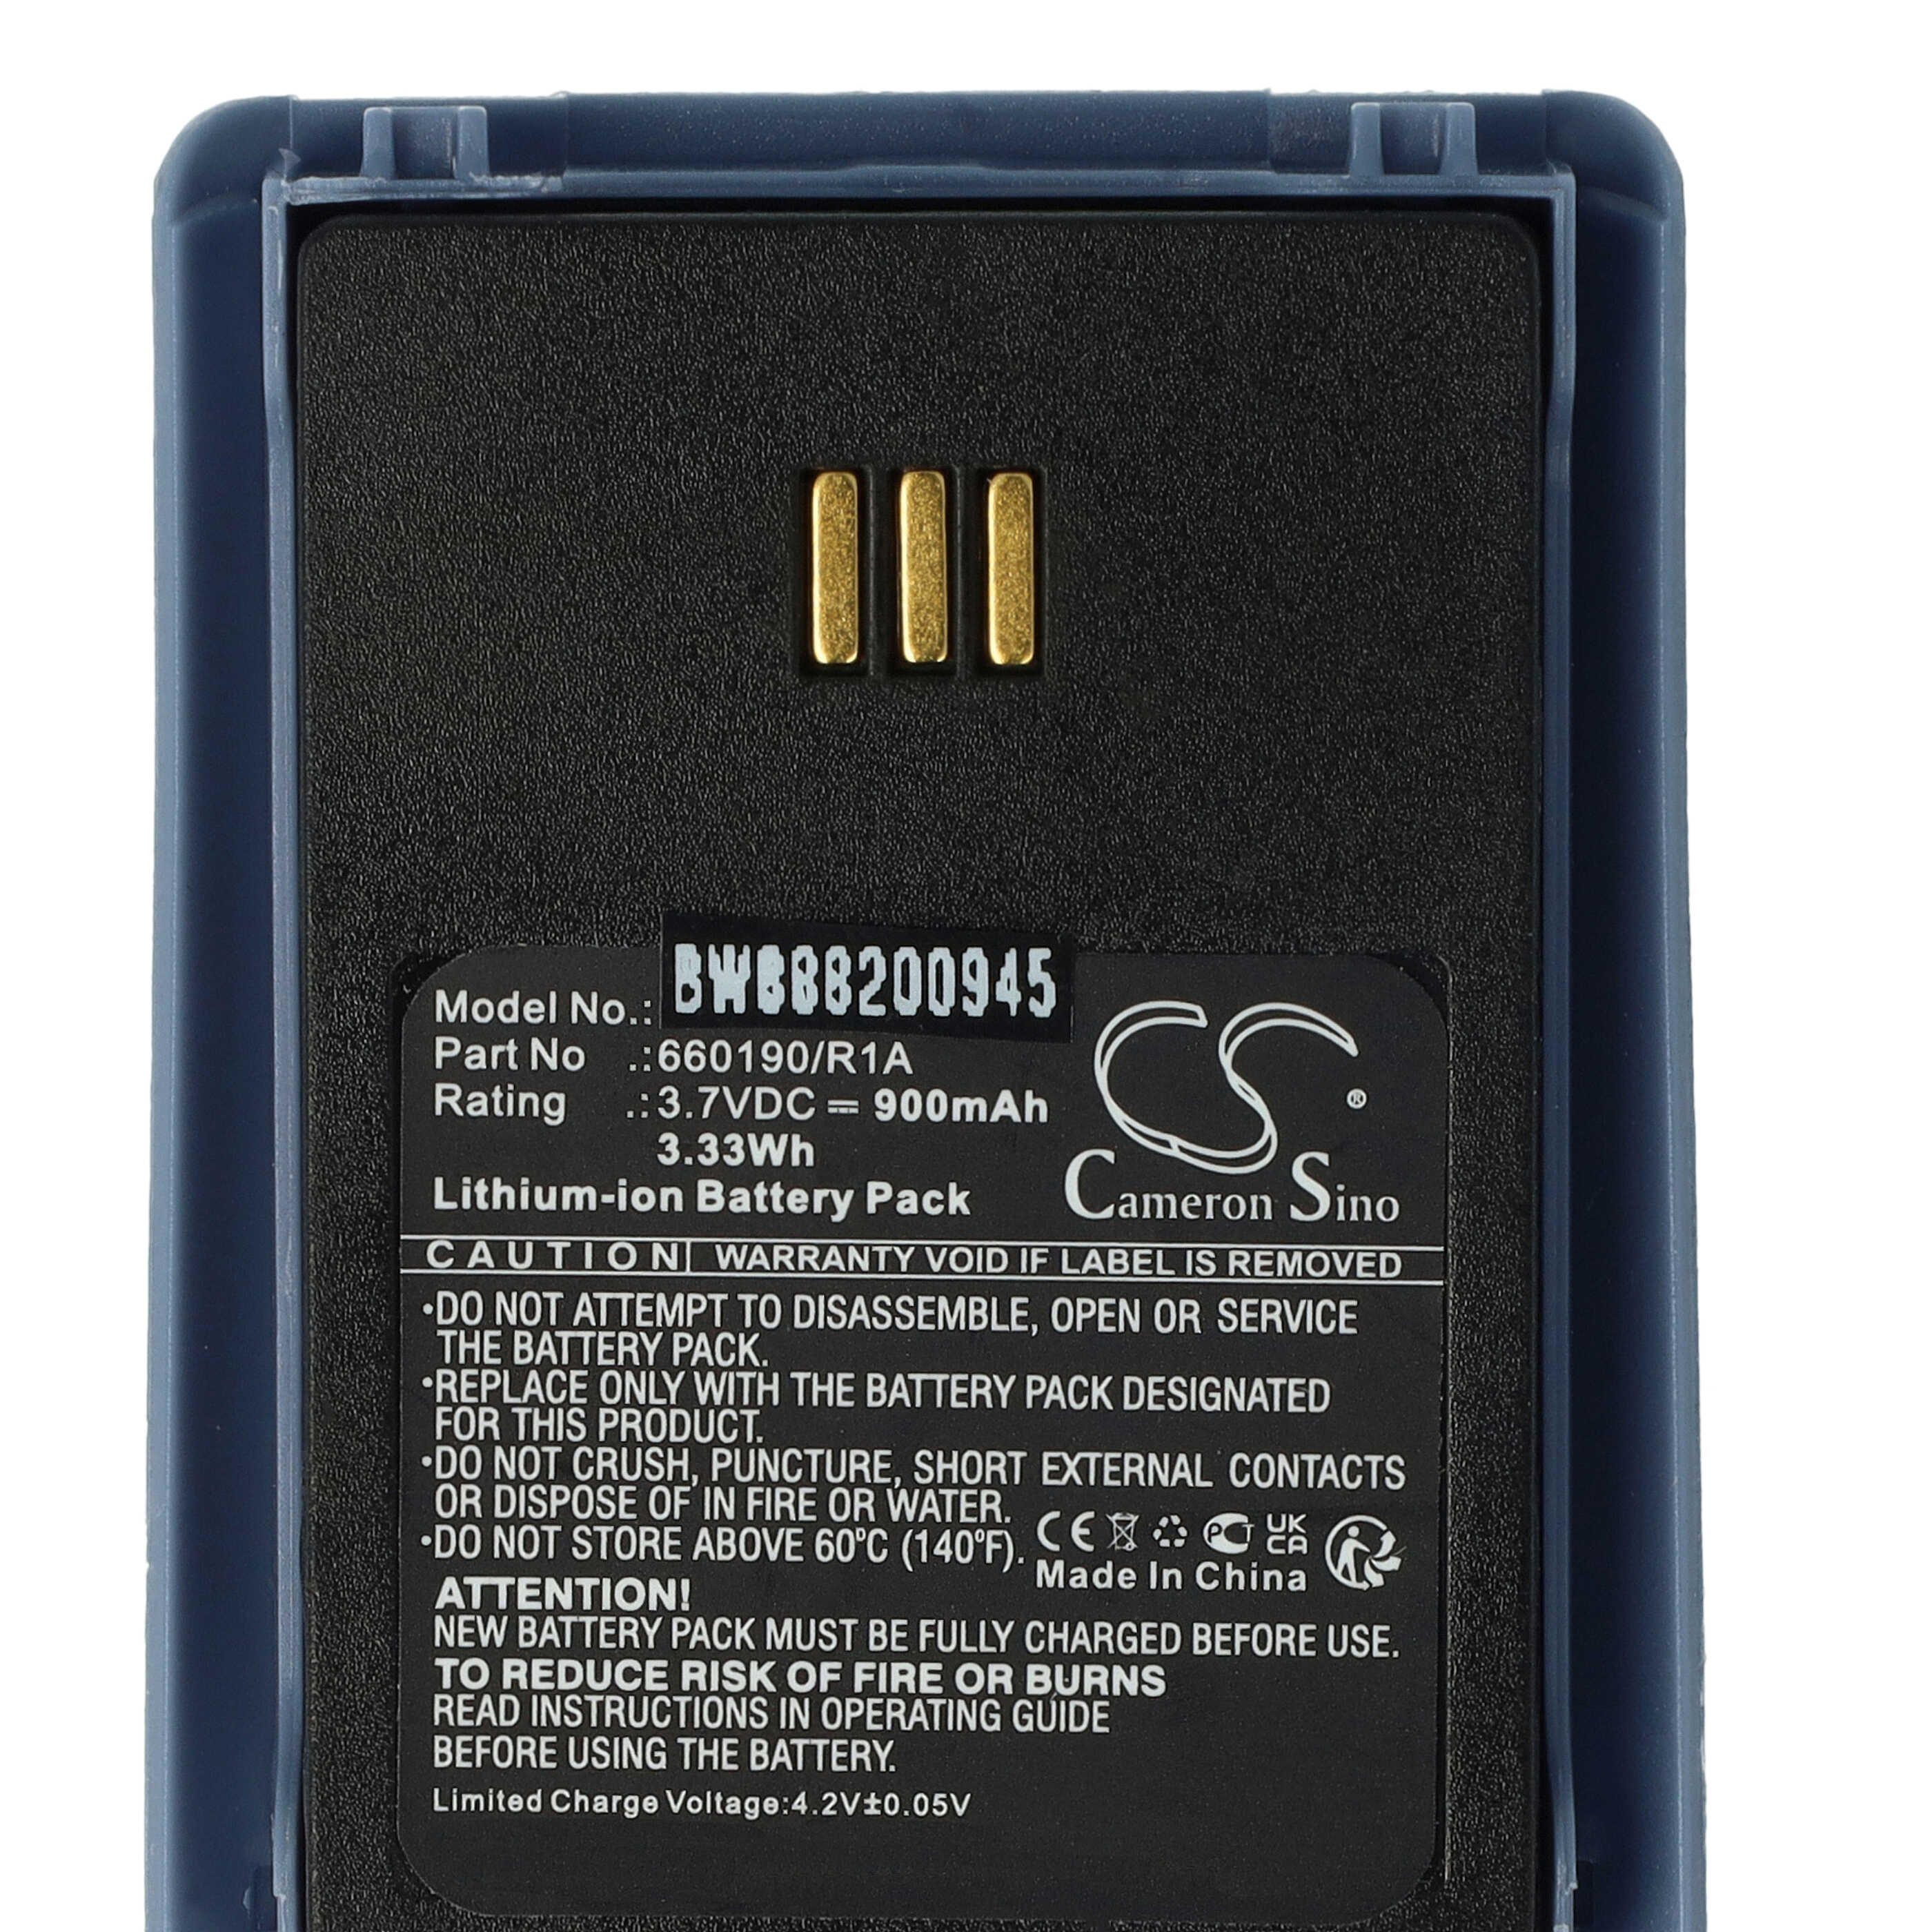 Akumulator do telefonu stacjonarnego zamiennik Alcatel 3BN78404AA, 0480468 - 900 mAh 3,7 V Li-Ion